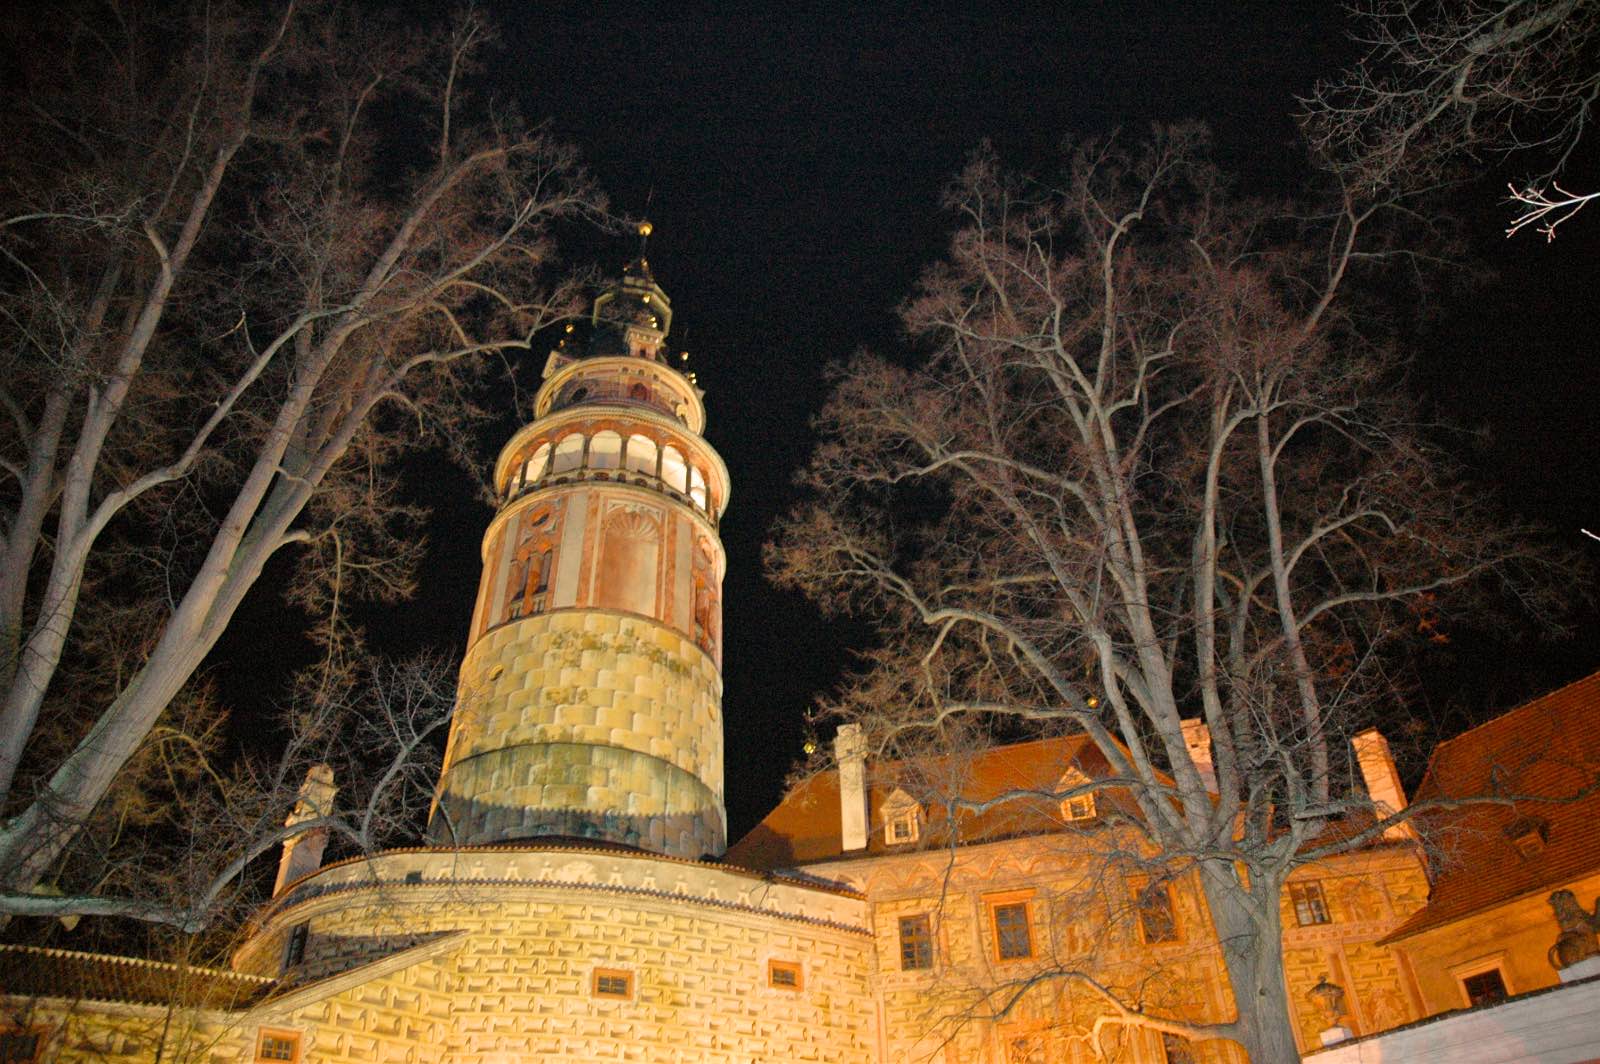 Cesky Krumlov Castle tower by night